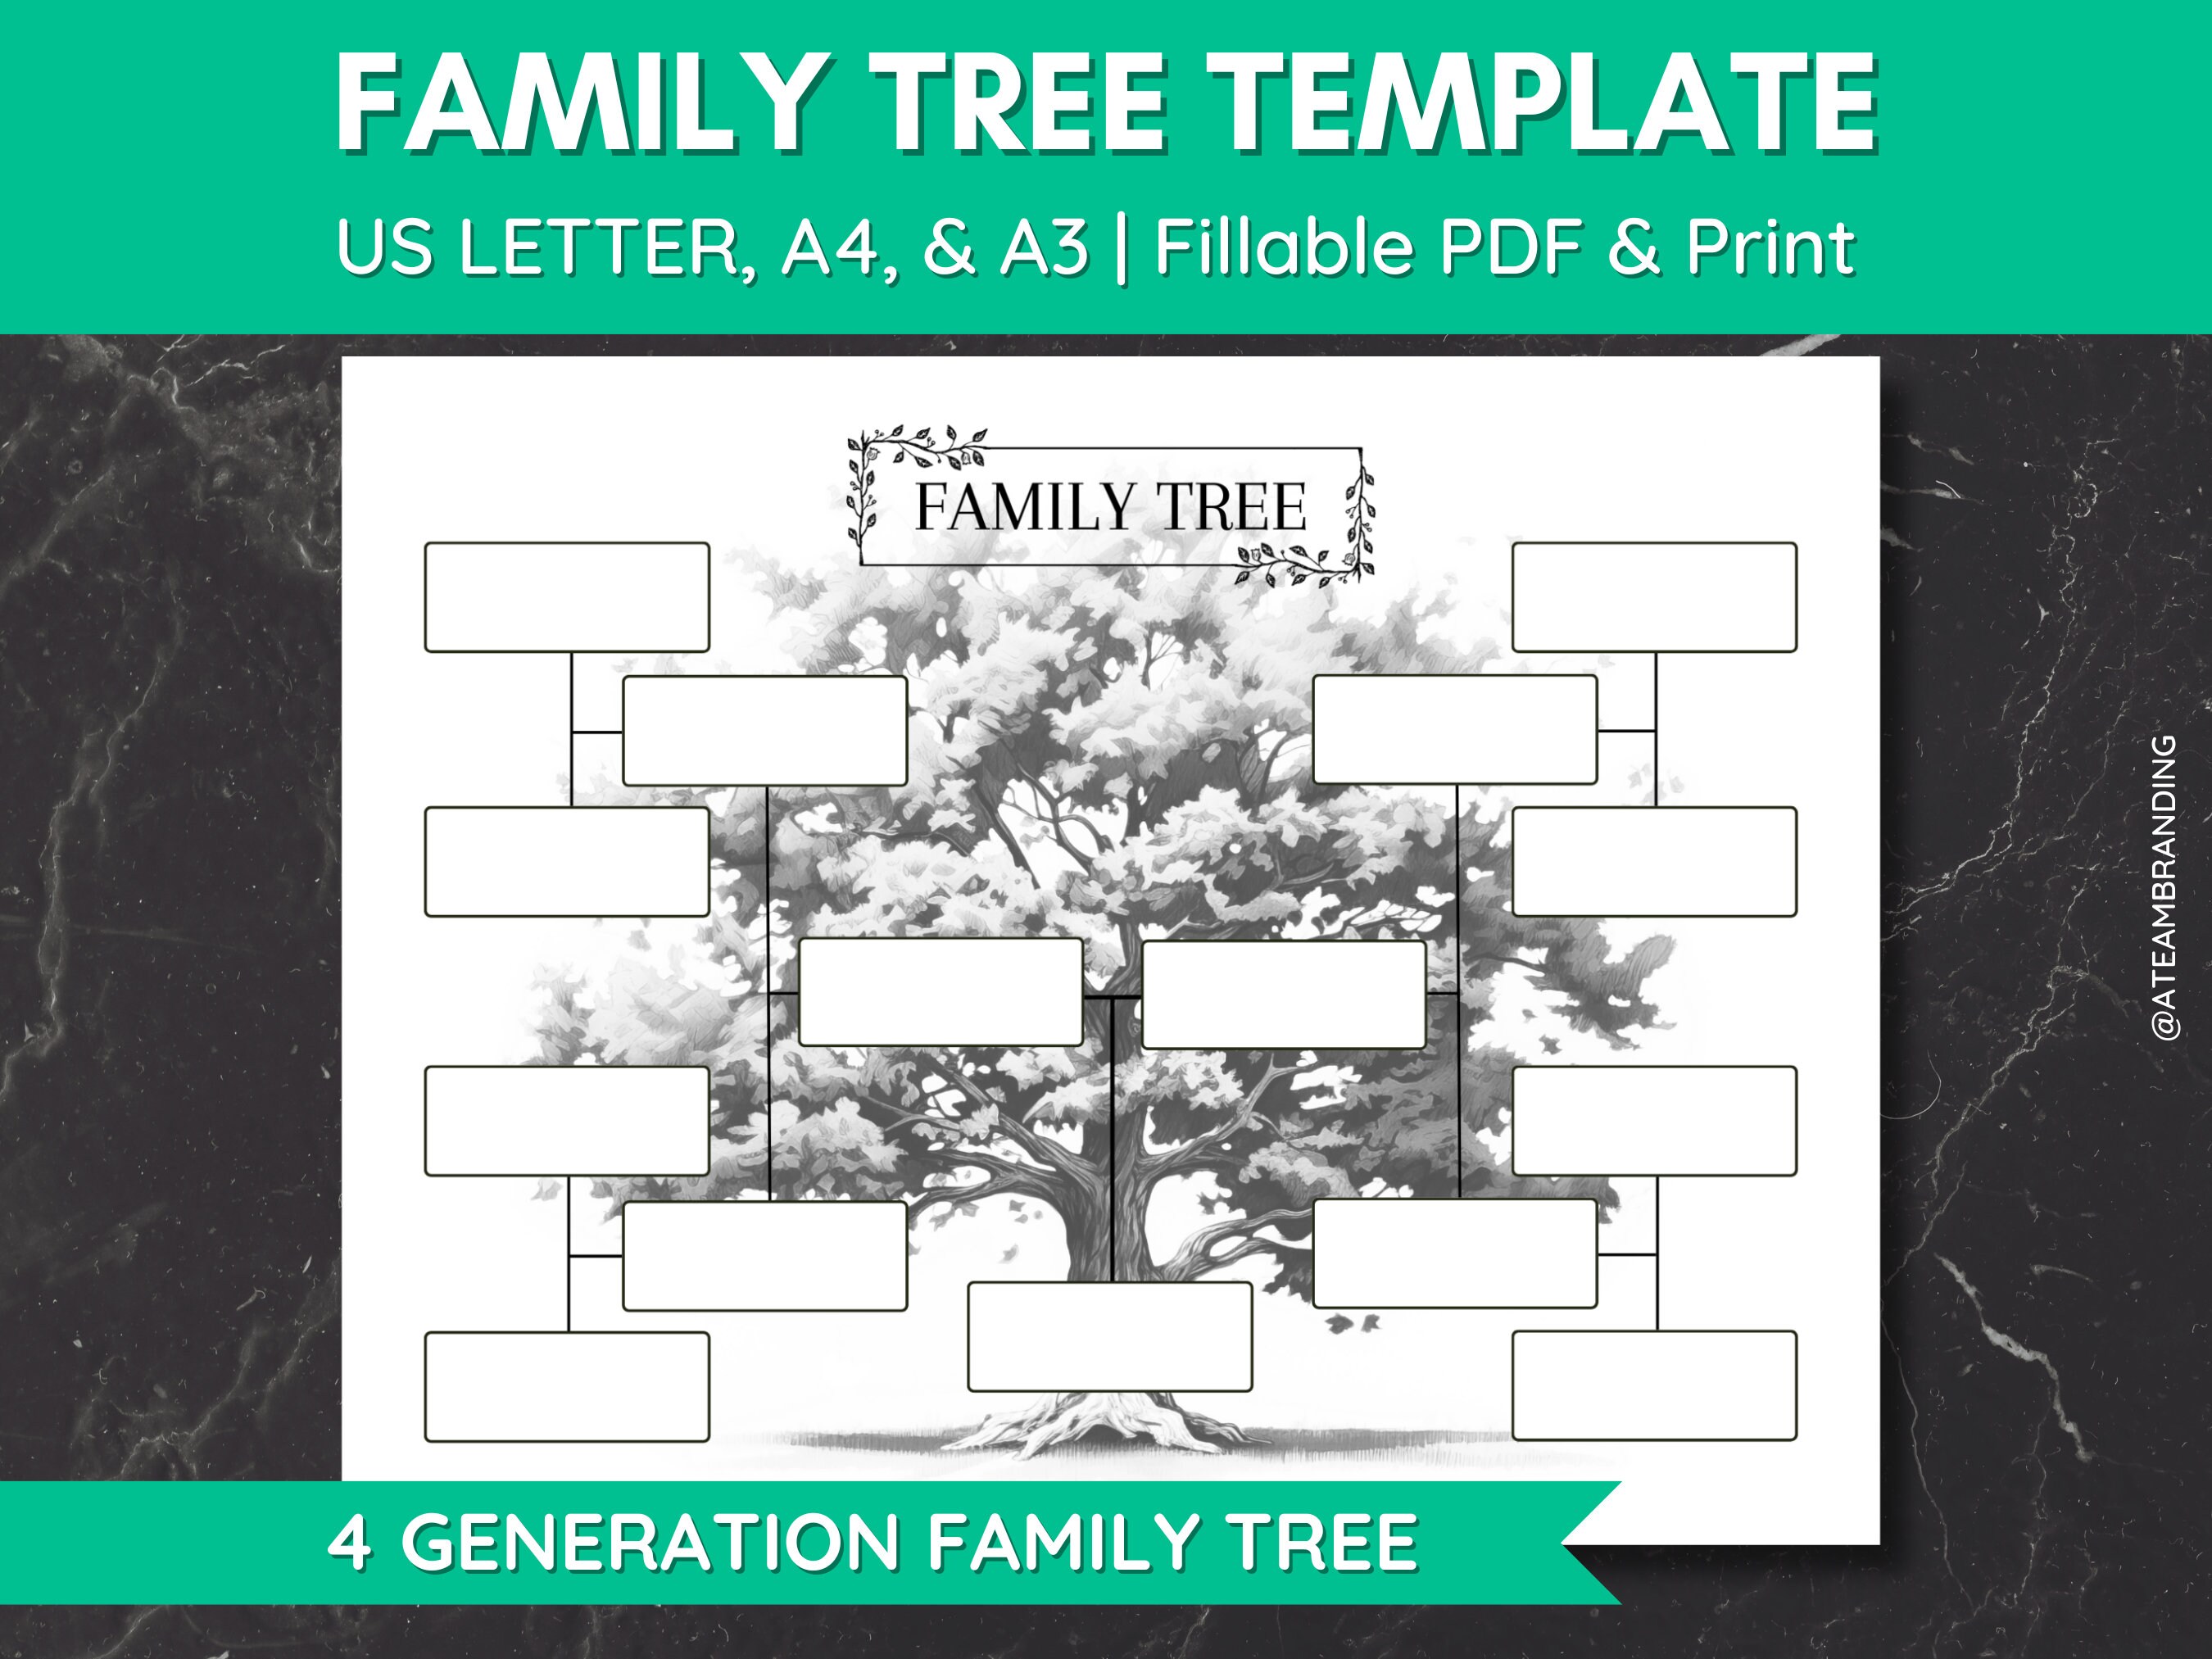 Custom Family Tree Chart, Ancestry Print, Genealogy Tree, Descendant Tree,  Personalised Mum Anniversary, Grandparent Family Gift 